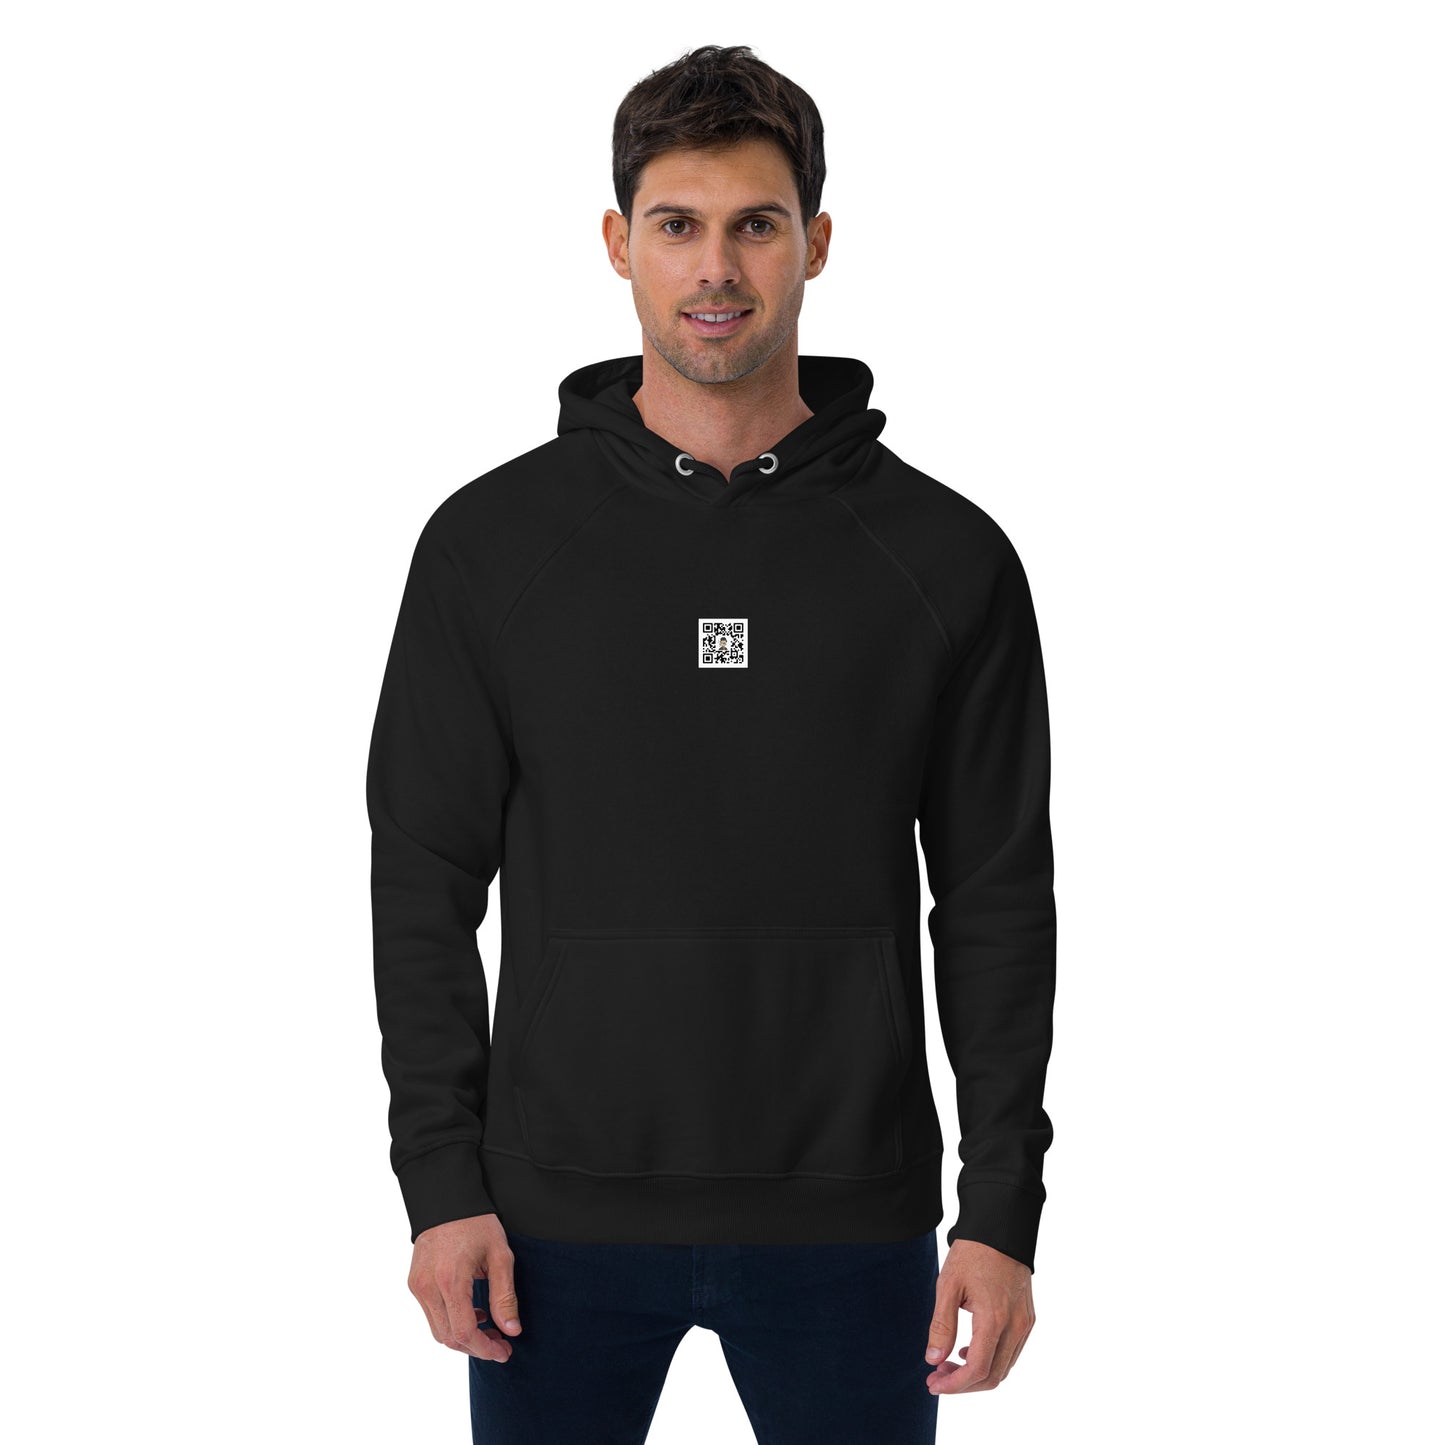 Unisex eco raglan hoodie feat. TOON #3078 (front logo-QRcode / Rear Print)